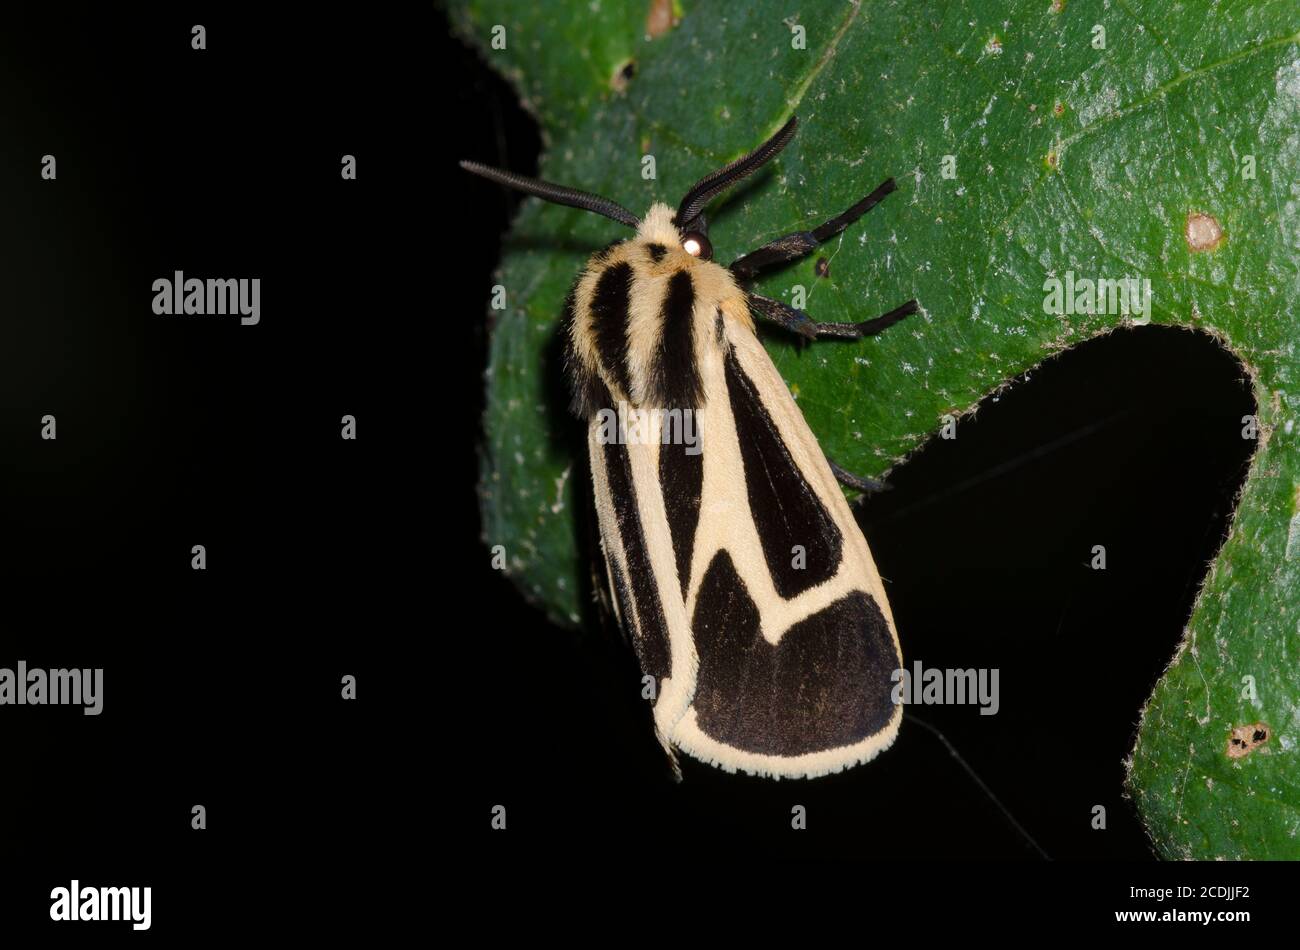 Tiger Moth, Apantesis sp., photographed at night Stock Photo